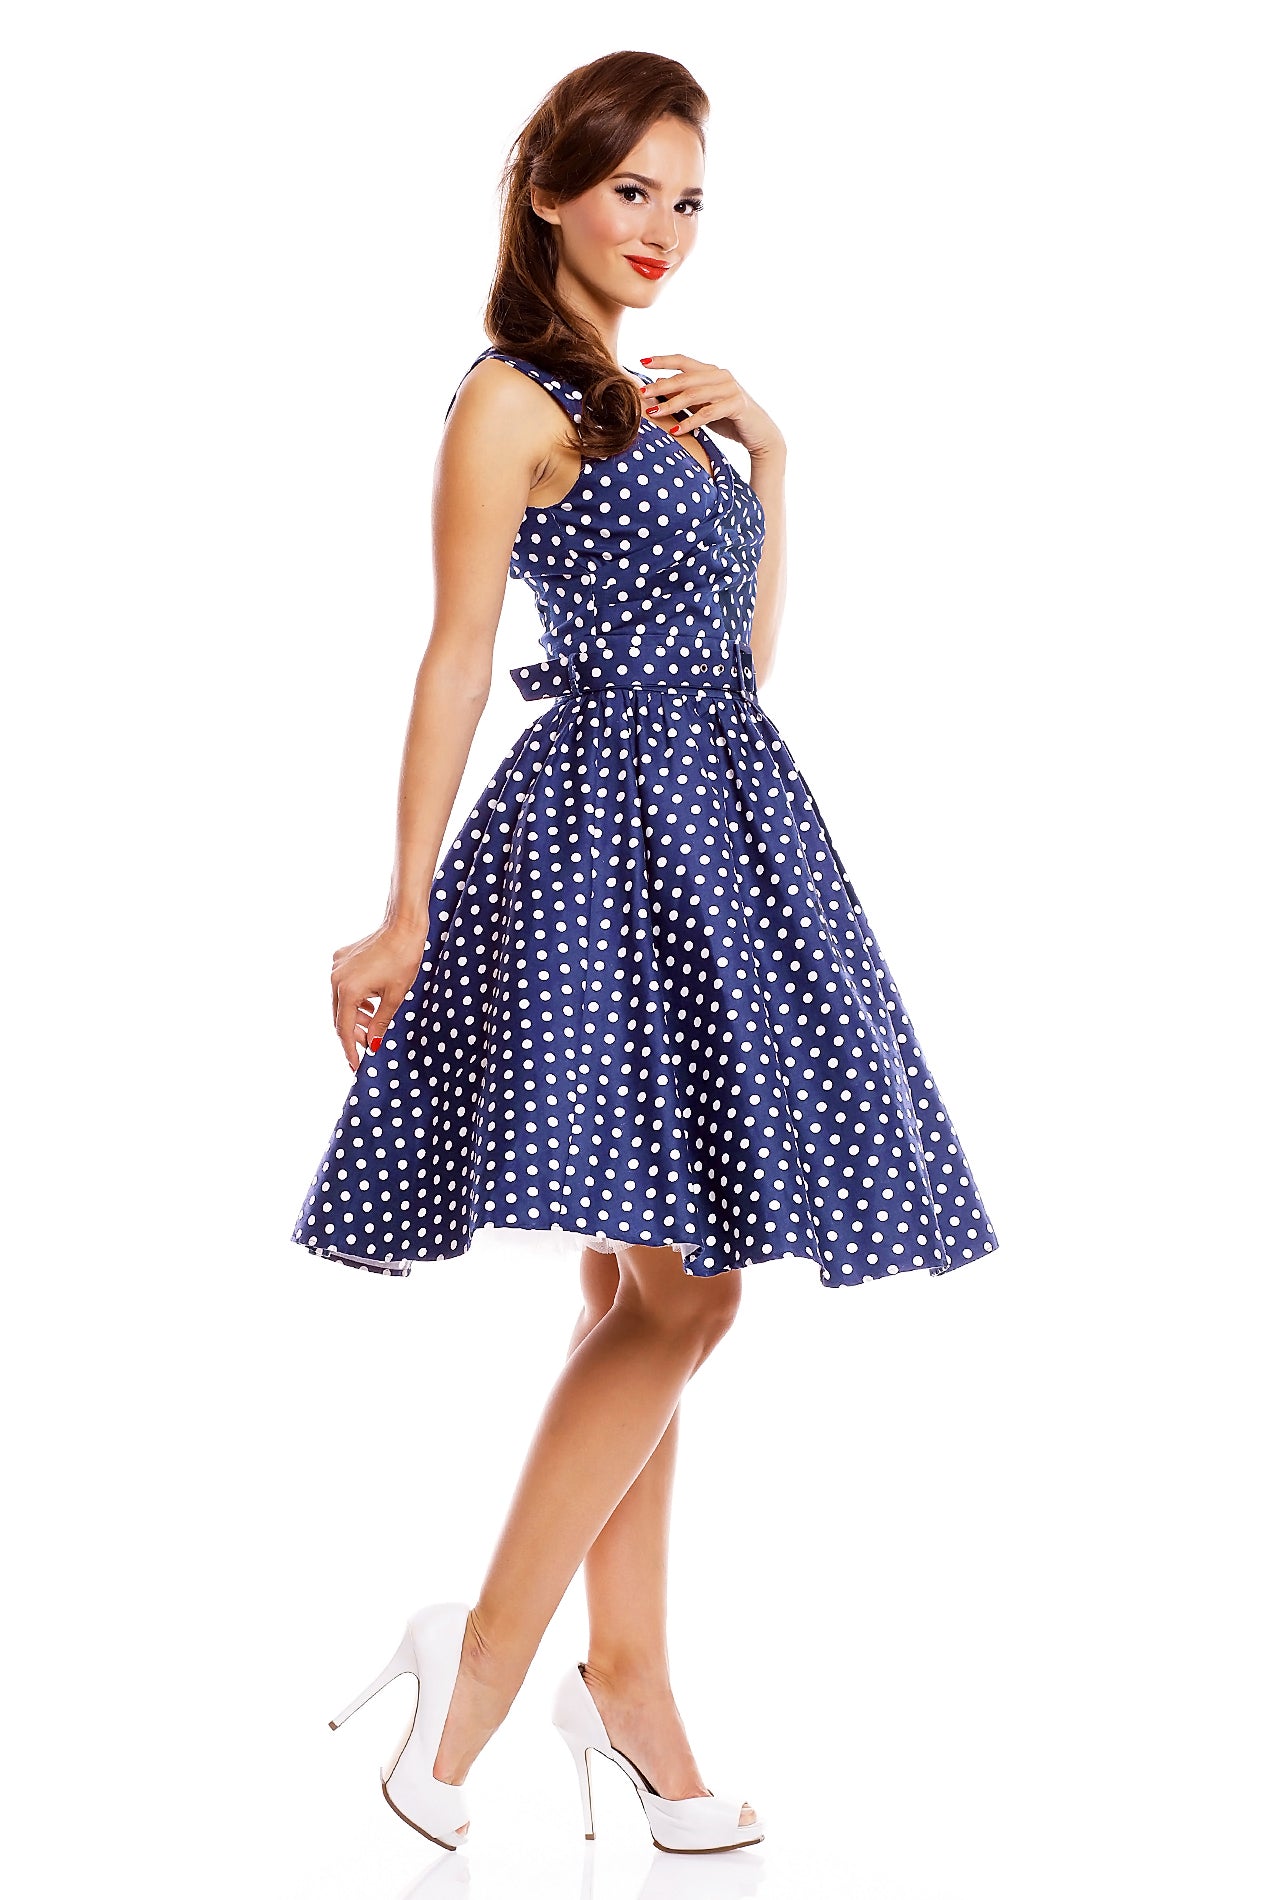 Stylish Inspired Swing Dress in Dark Blue Polka Dots